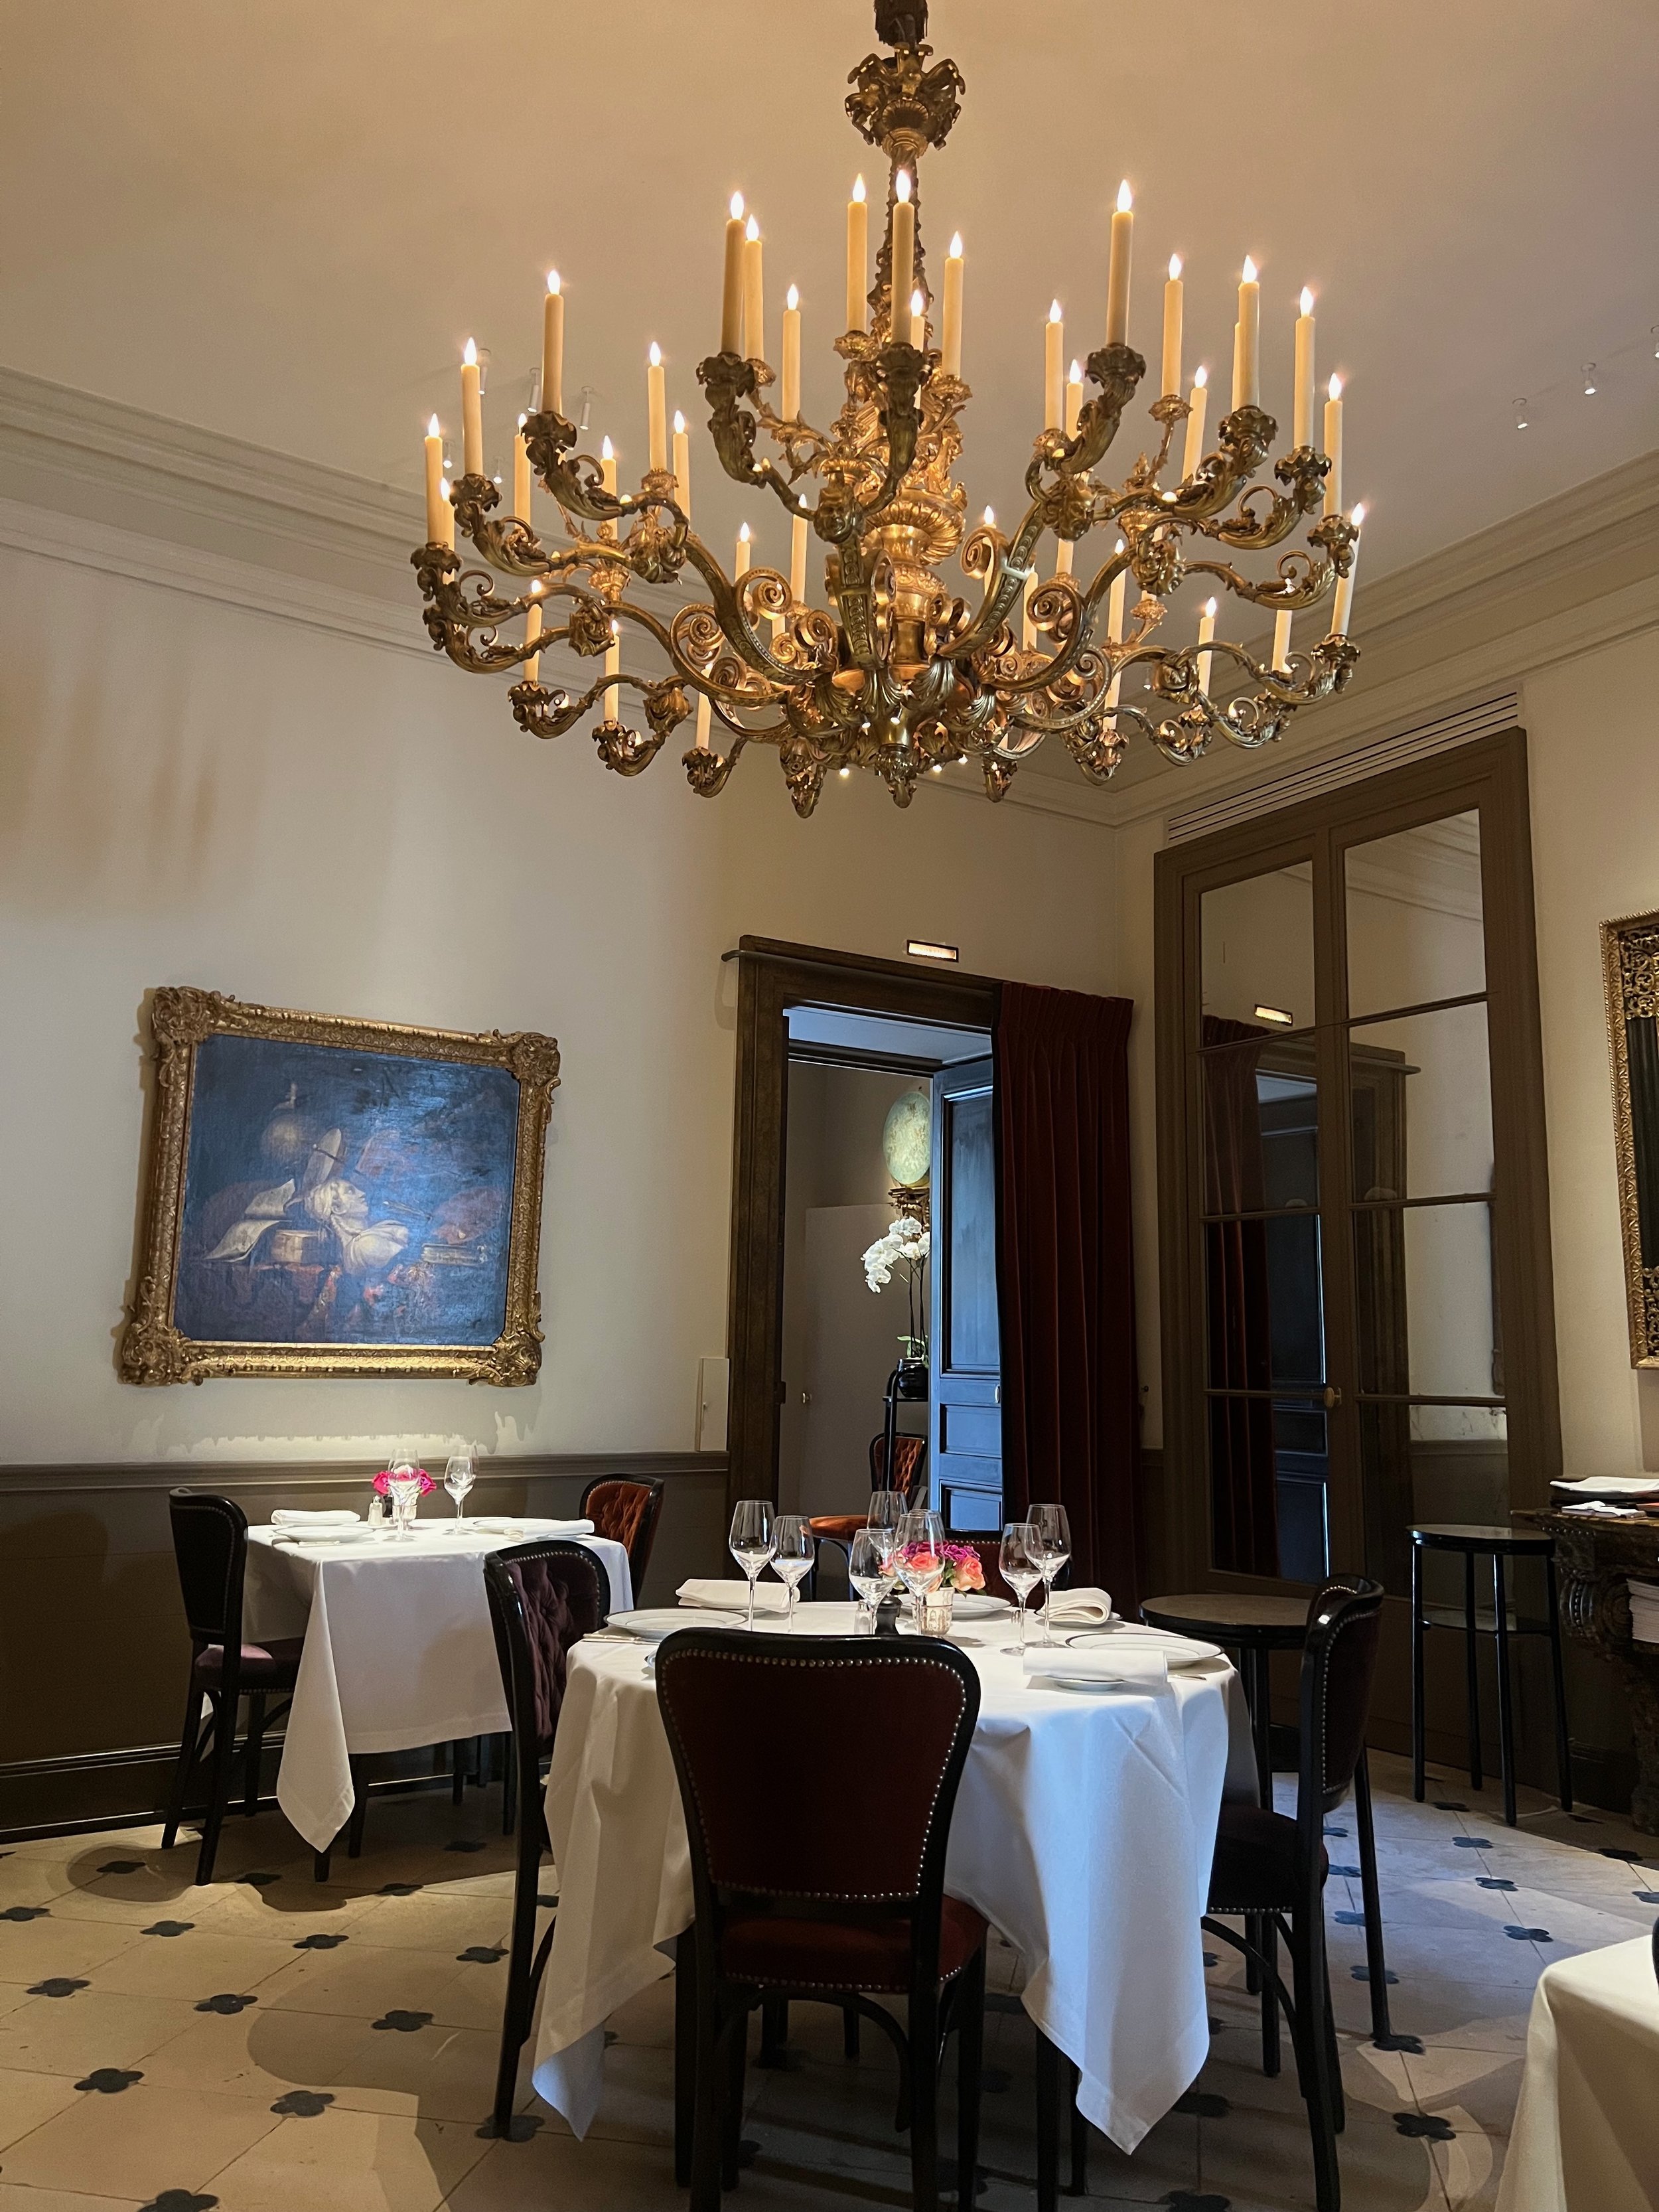 Le Central in Paris - Restaurant Reviews, Menus, and Prices